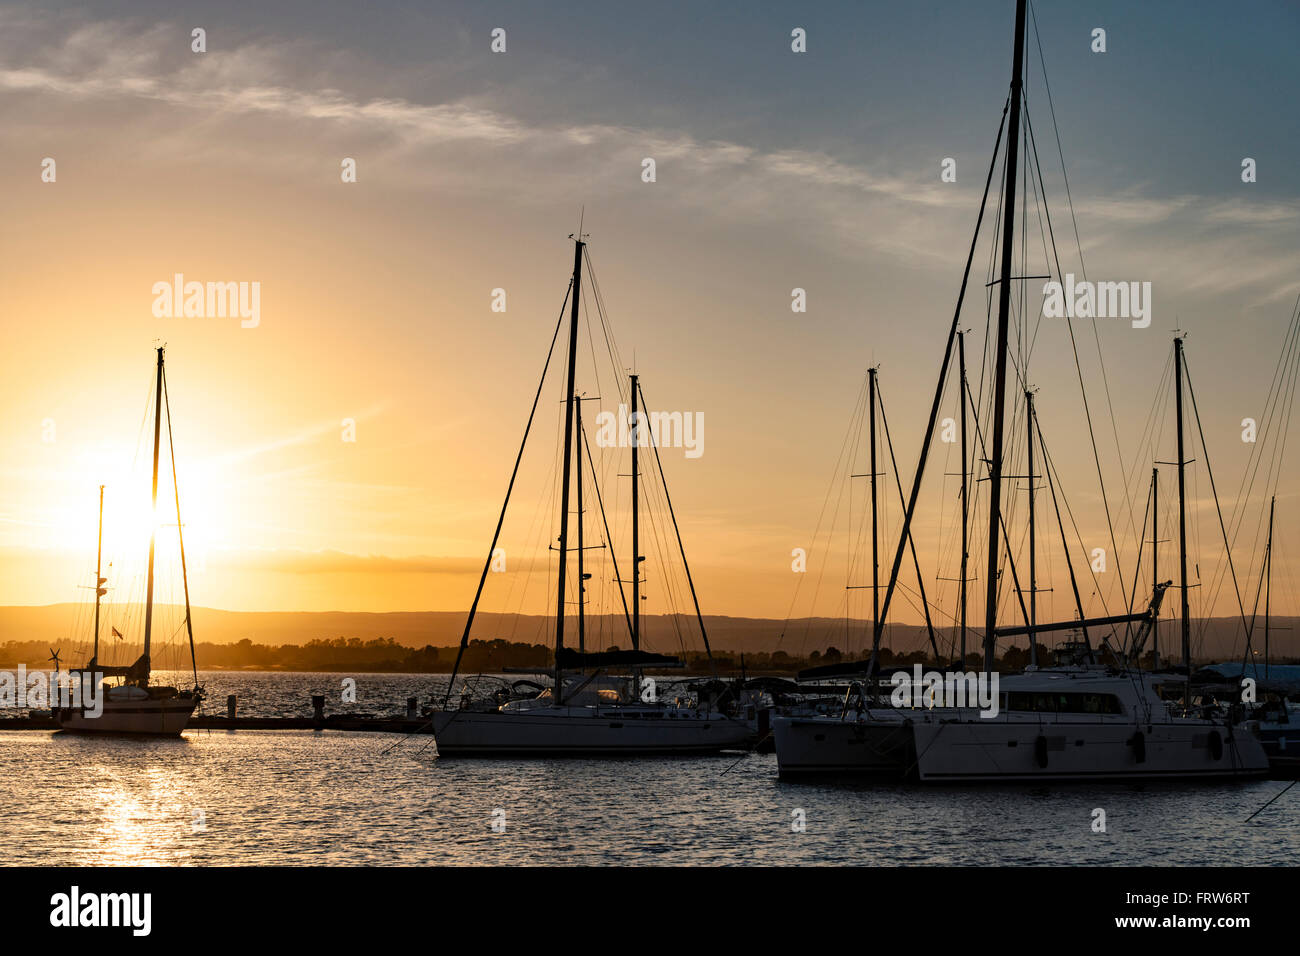 Italy, Sicily, Siracuse, boats at marina at sunset Stock Photo